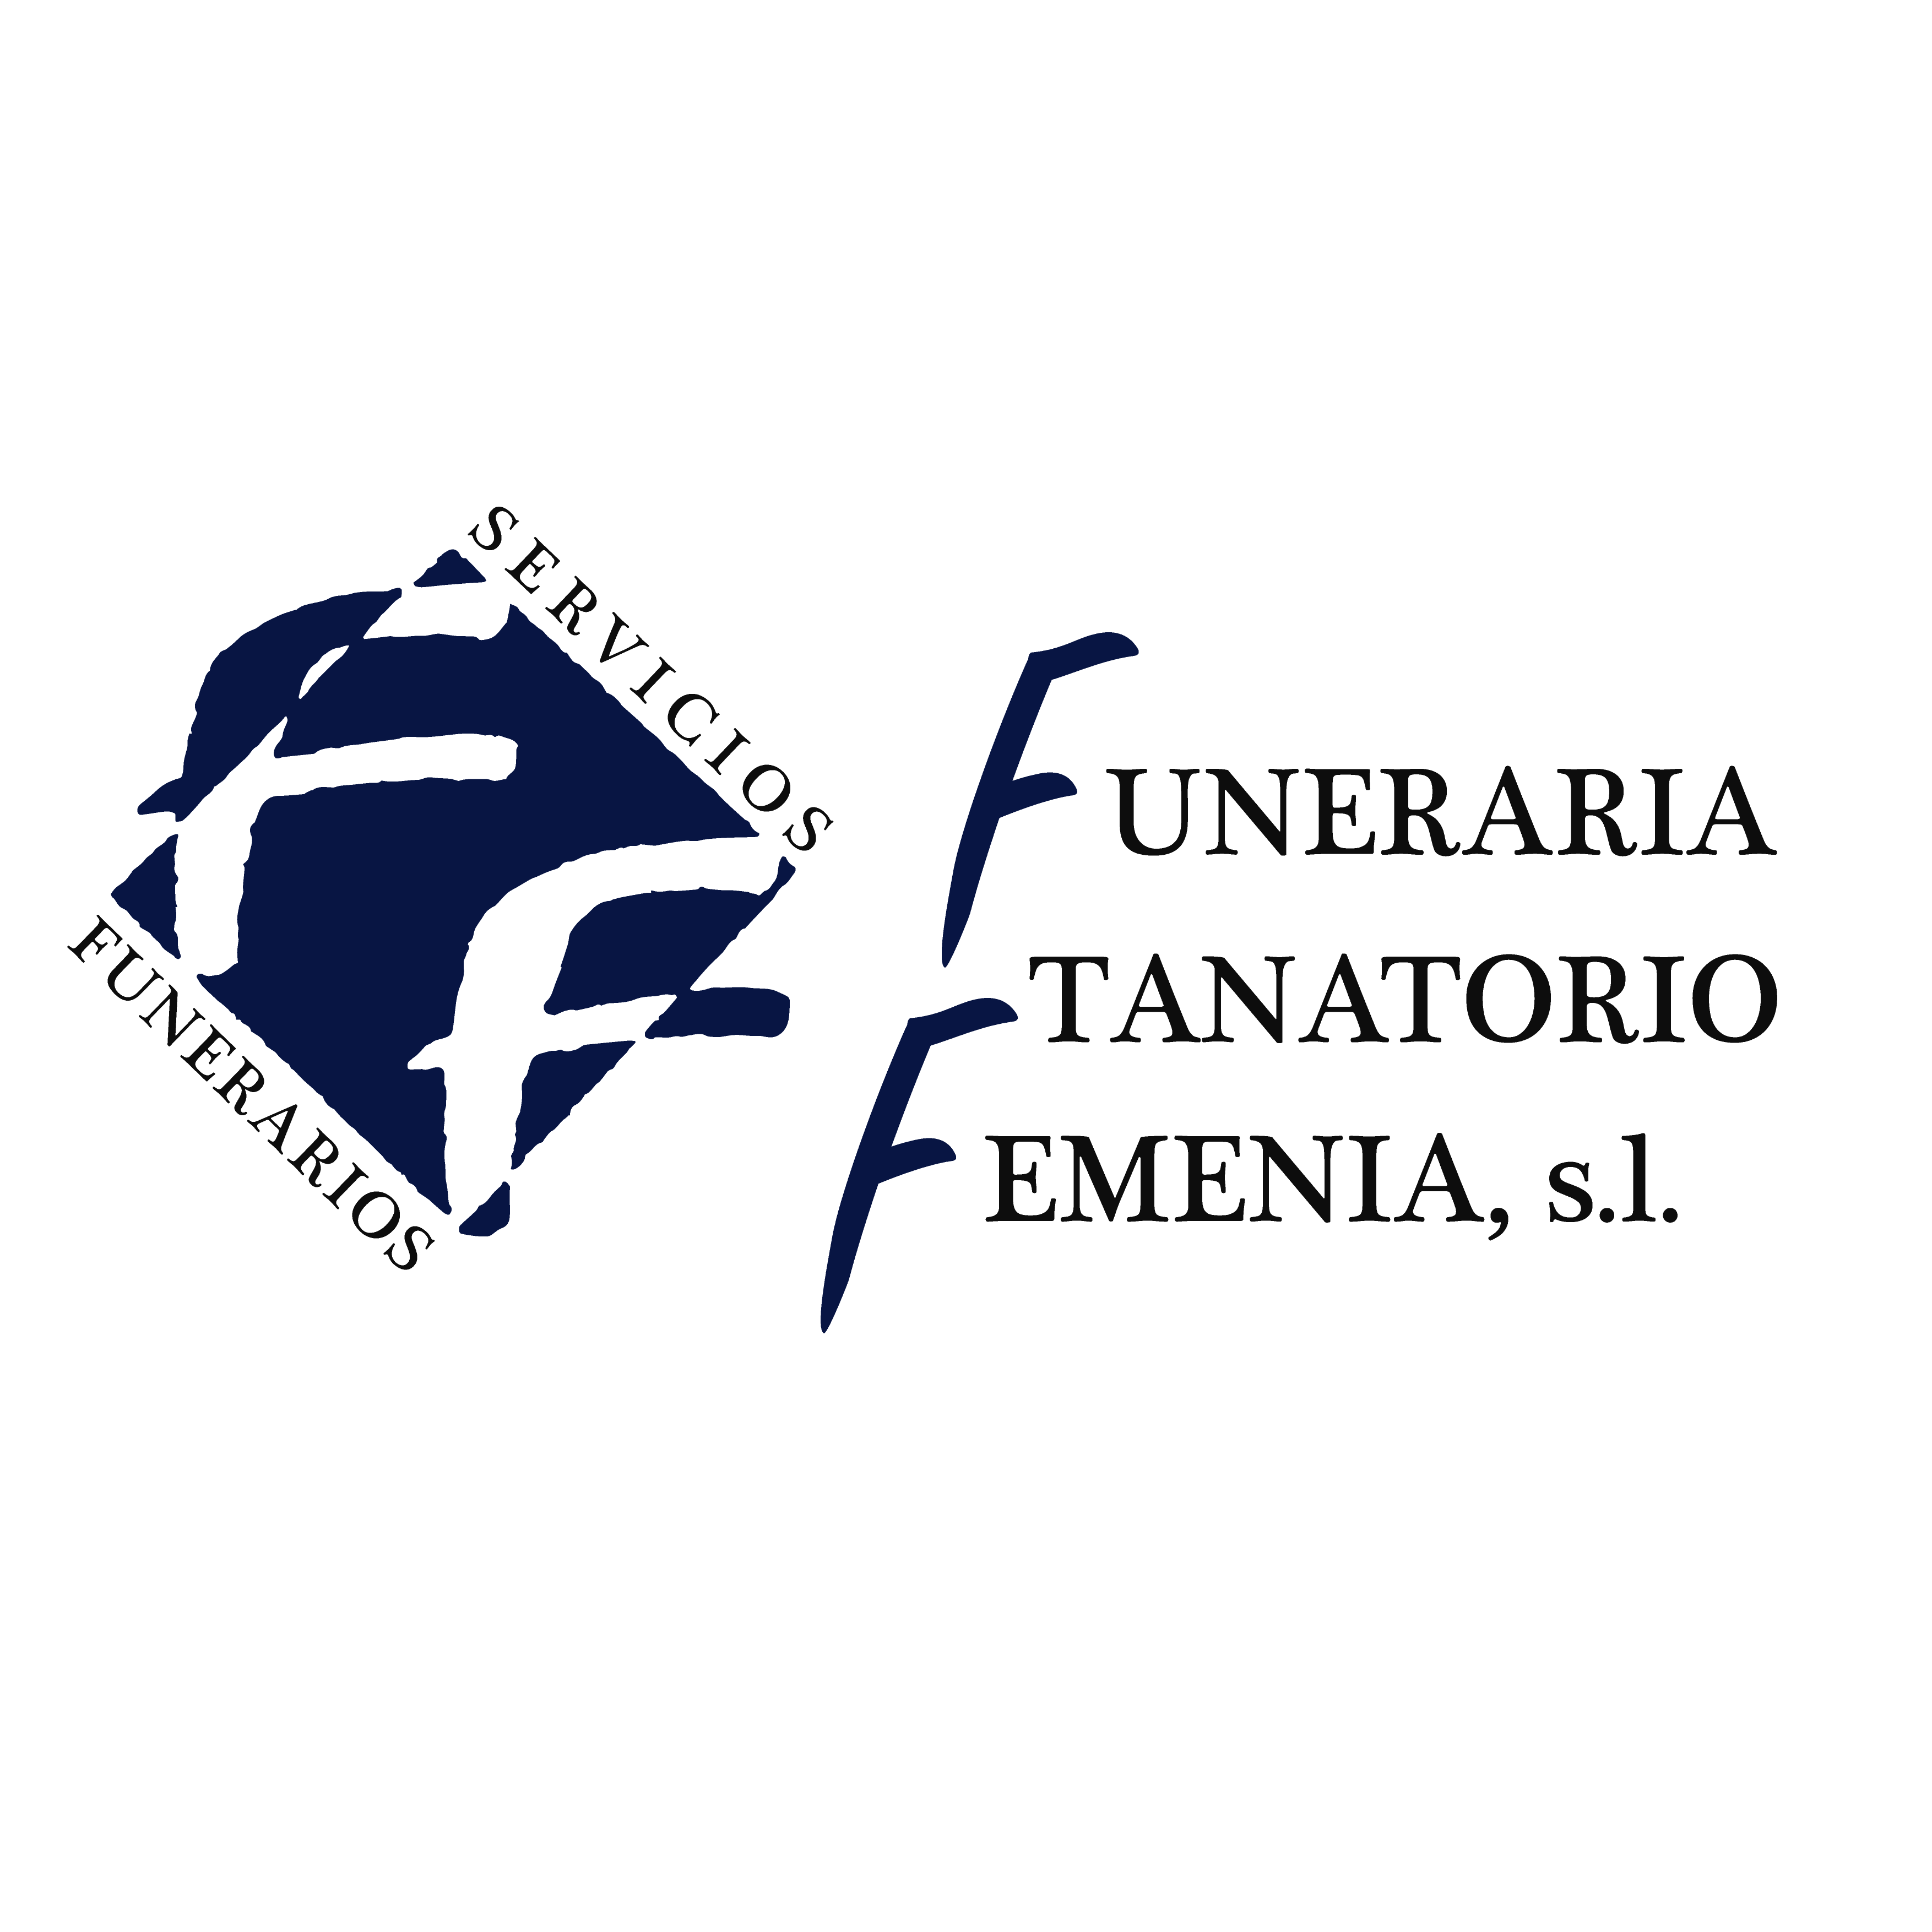 Funeraria Tanatorio Hermanos Femenía Pineda Logo